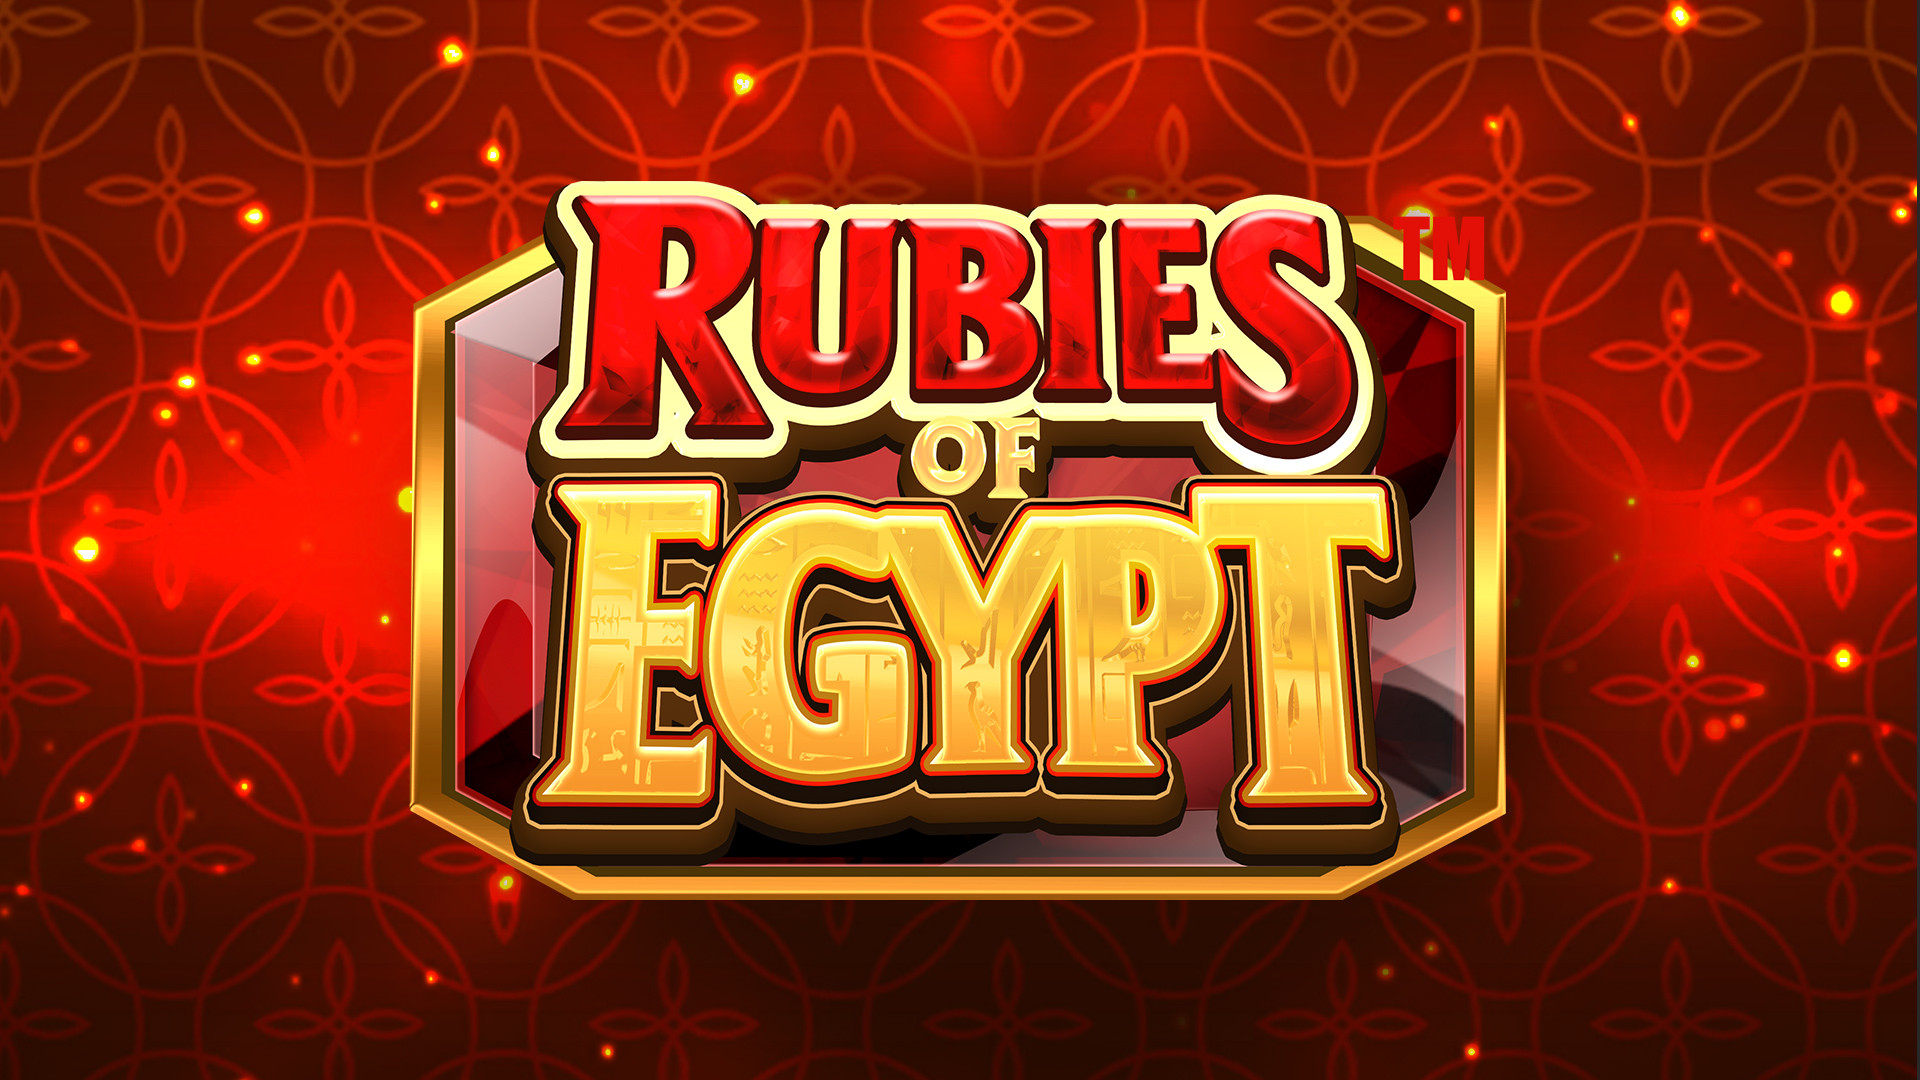 Rubies of Egypt